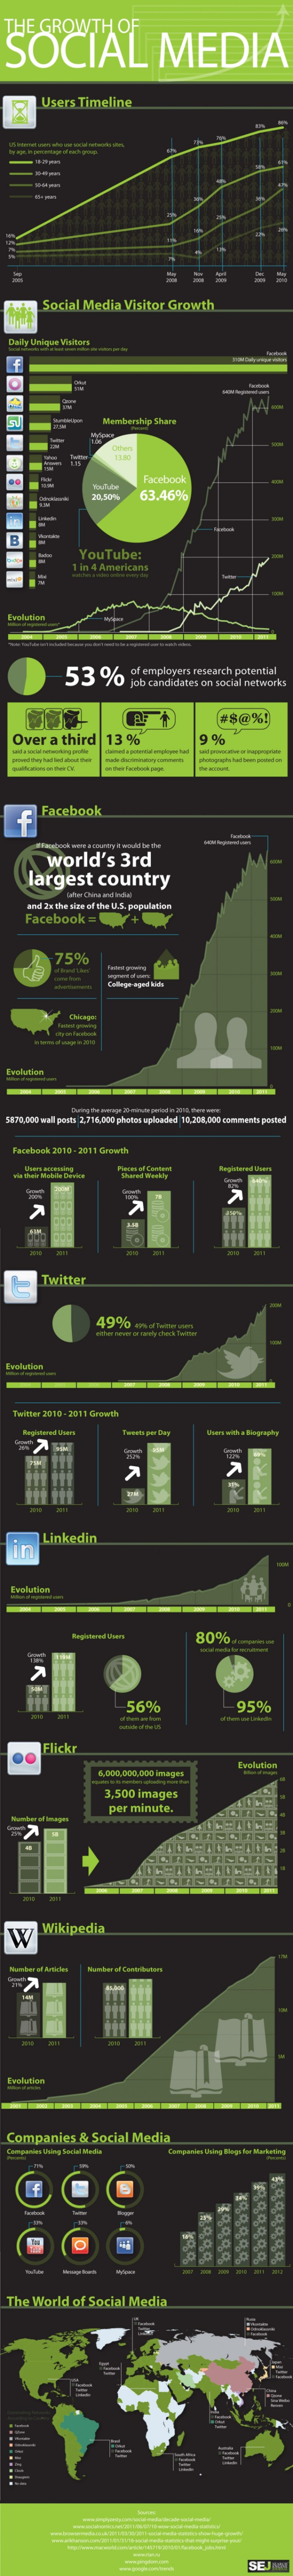 Social Media Growth resized 600